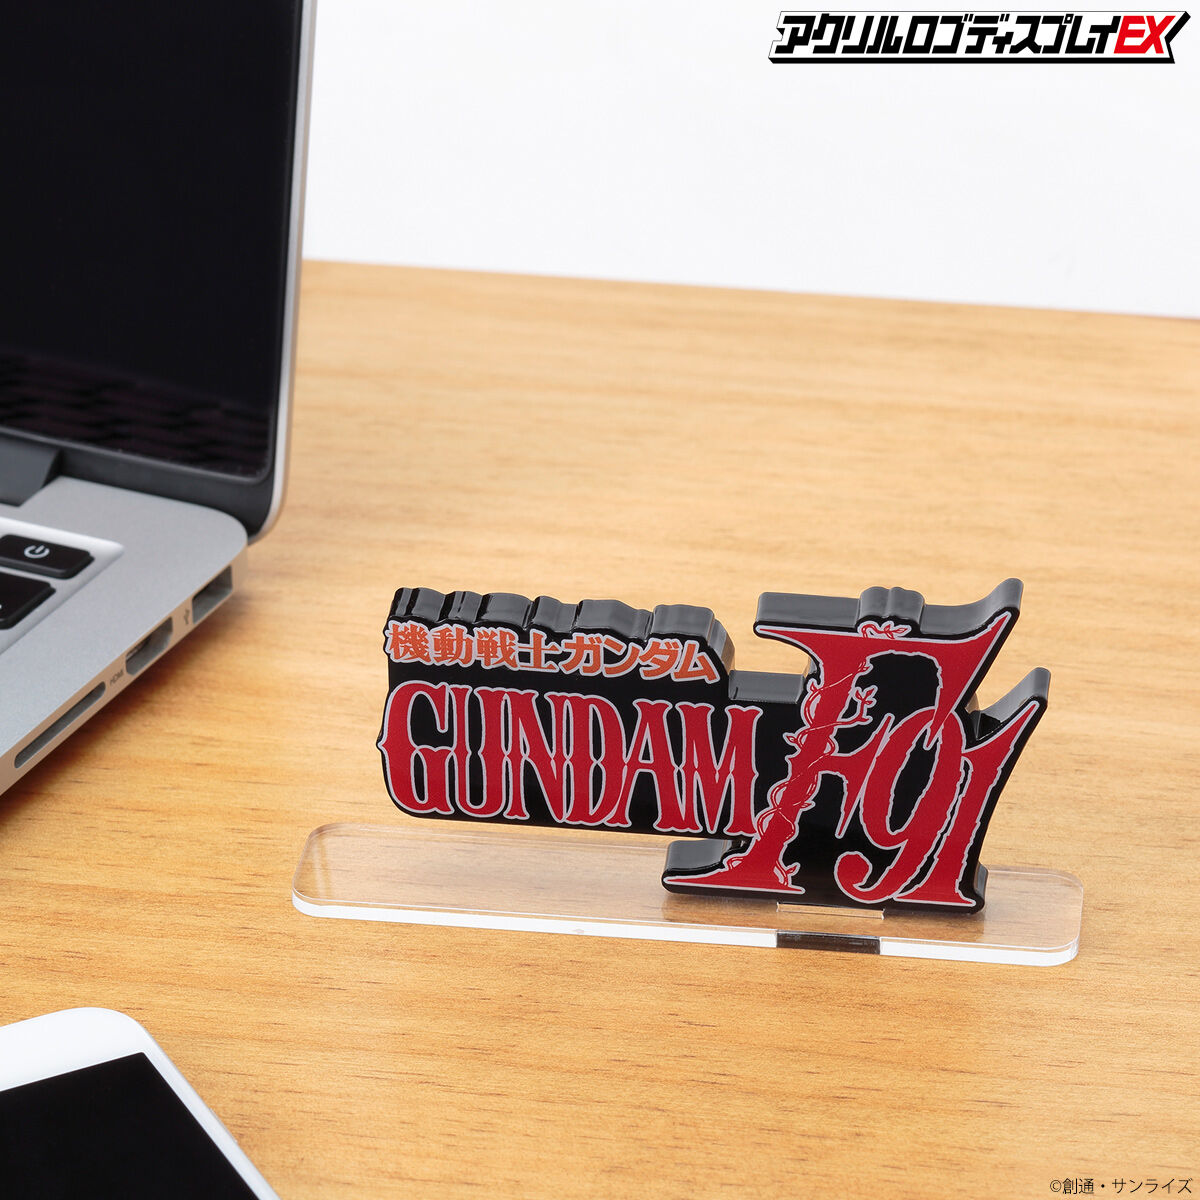 Acrylic Logo Diplay EX-Mobile Suit Gundam F91